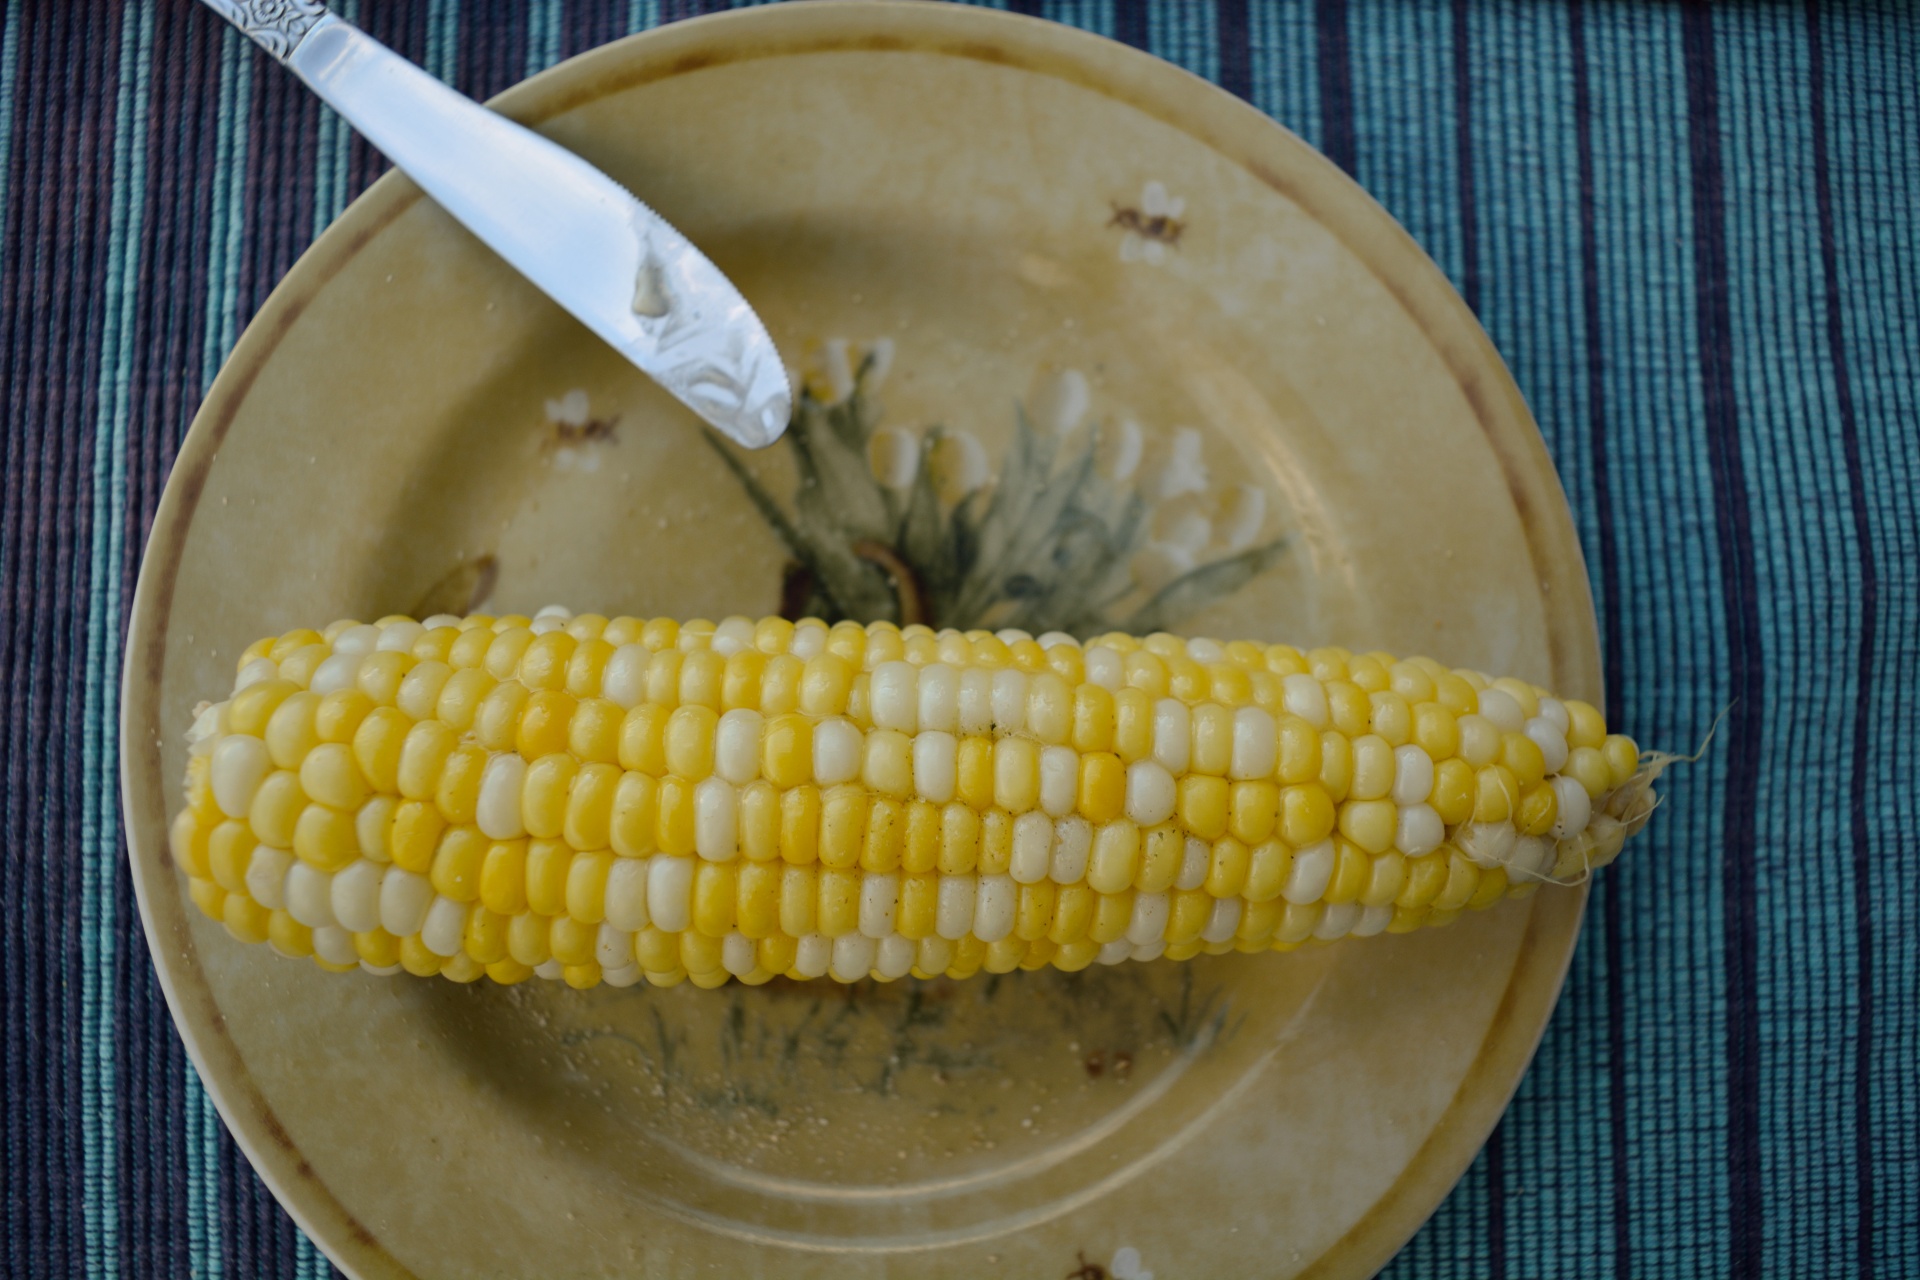 Corncobs,corn,cereal,food,feed - free photo from needpix.com AMP.